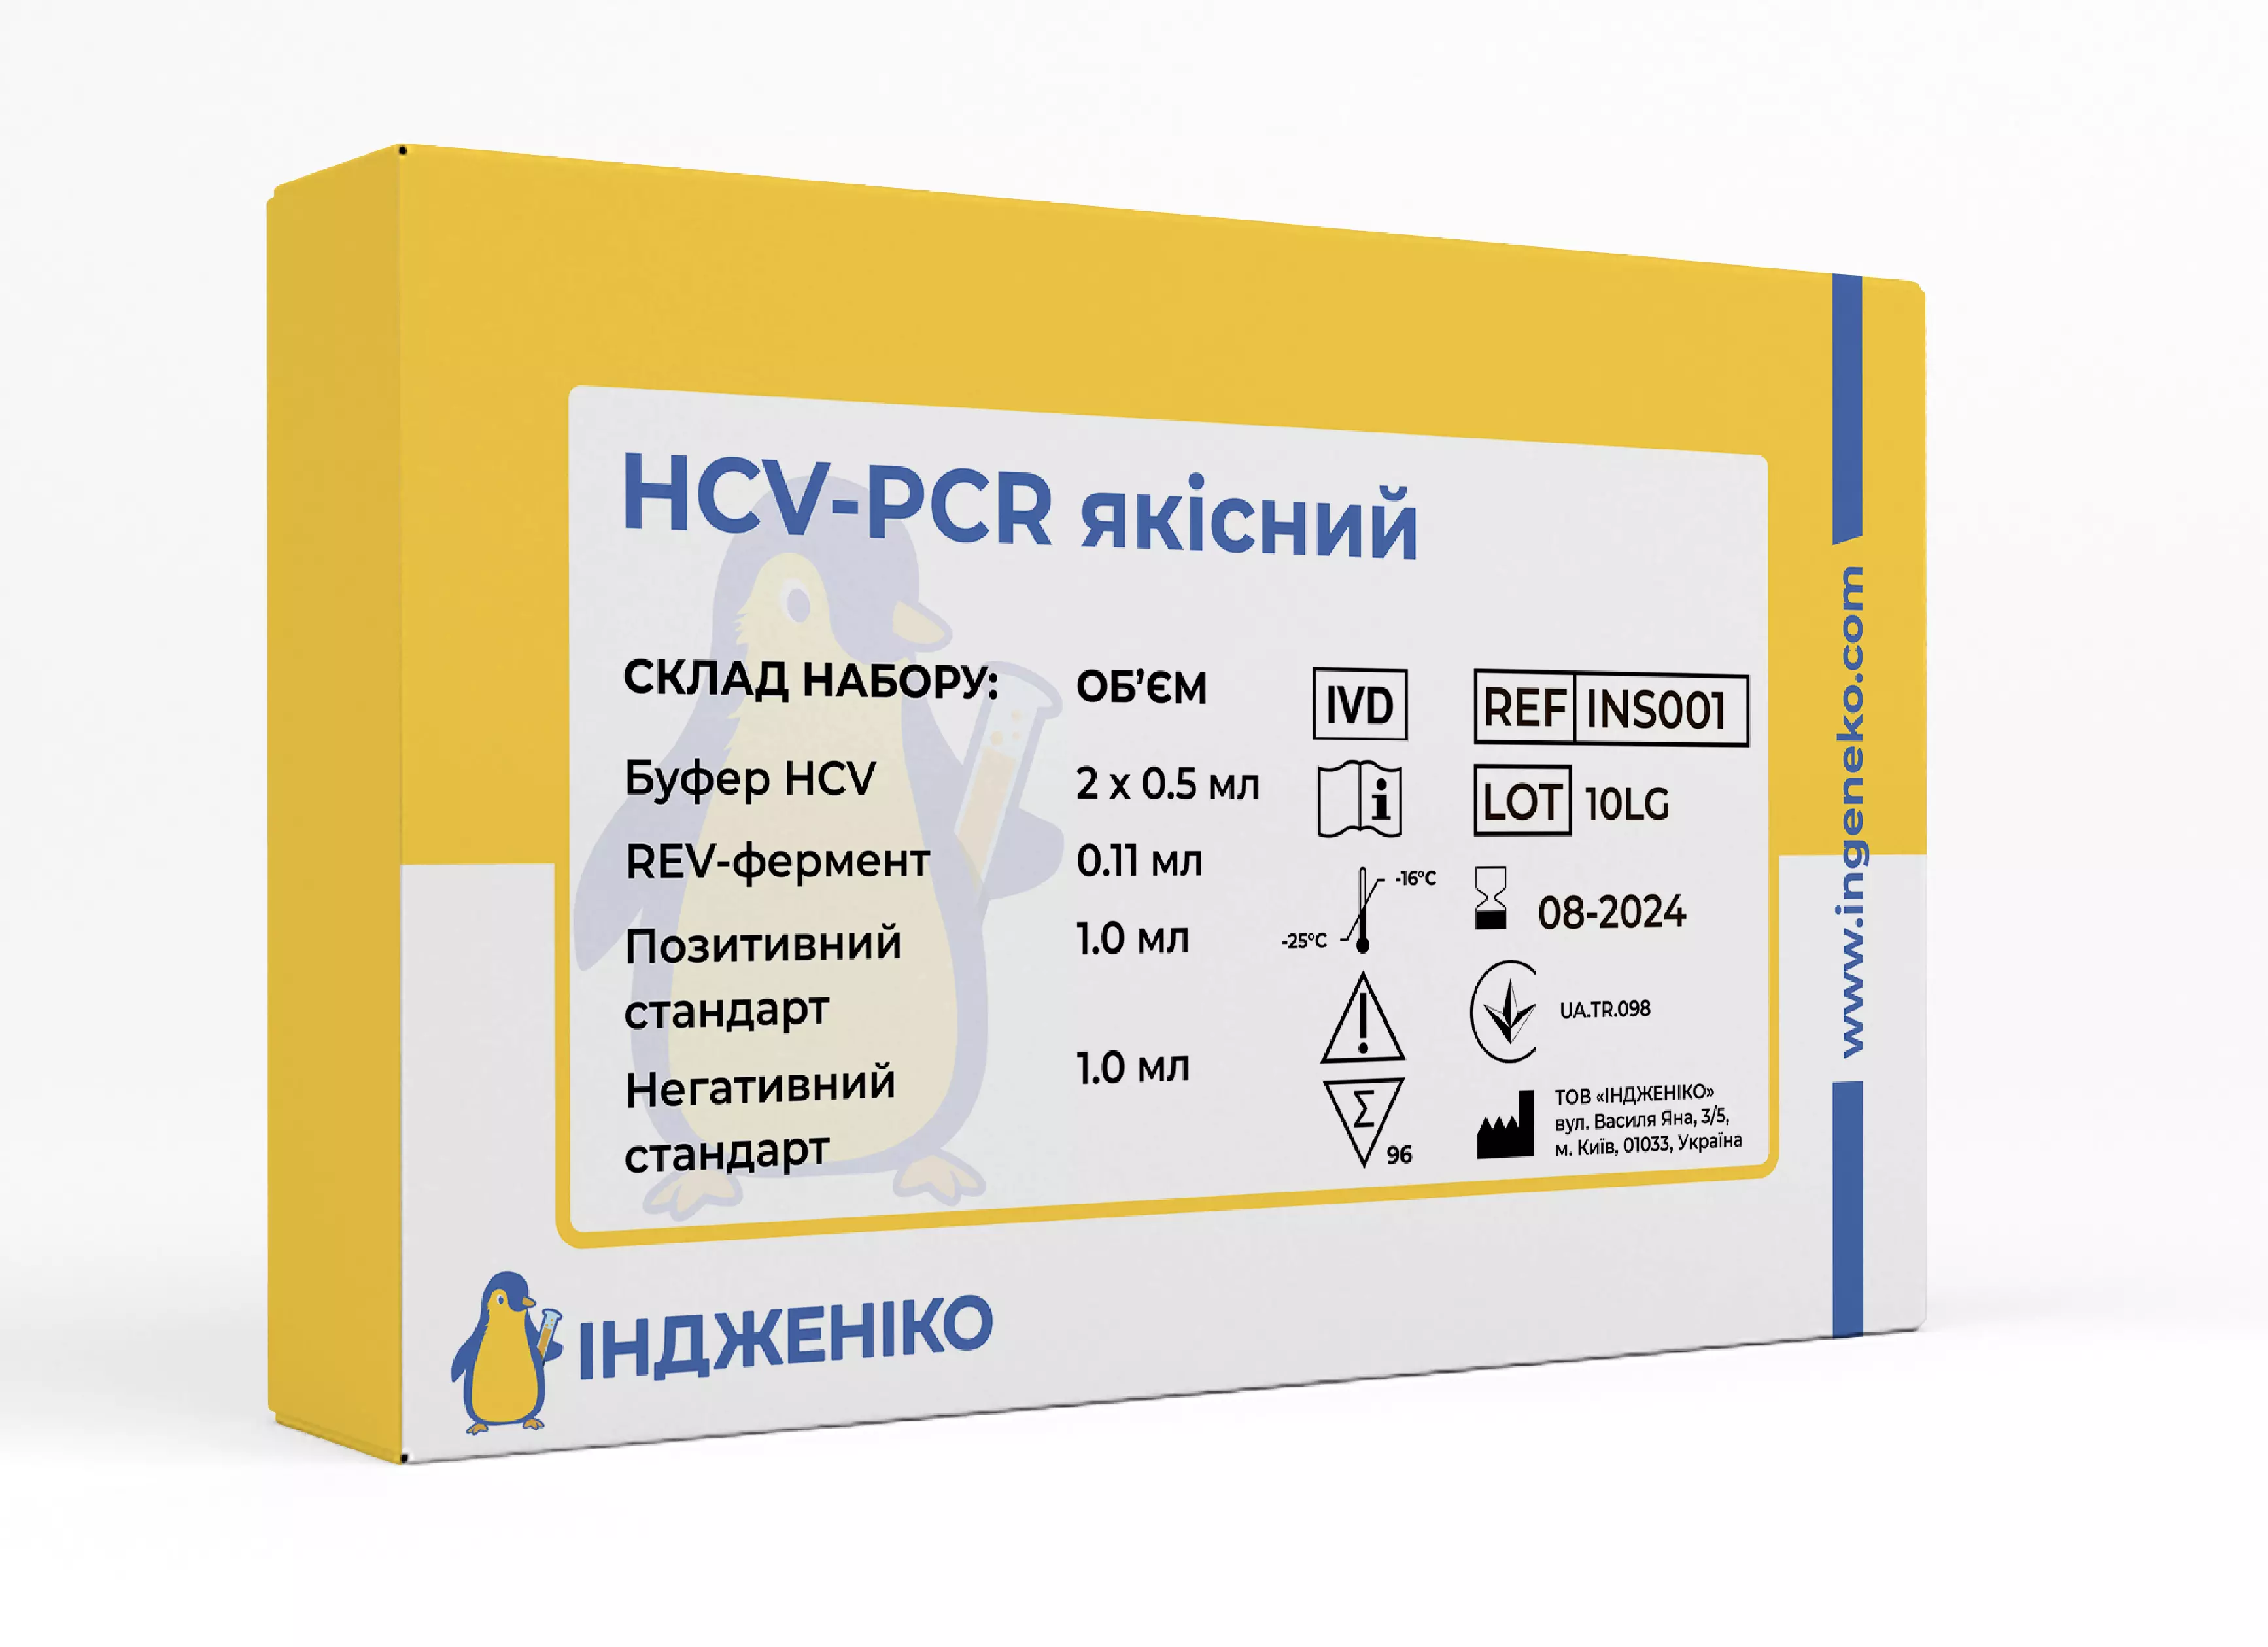 HCV-PCR якісний